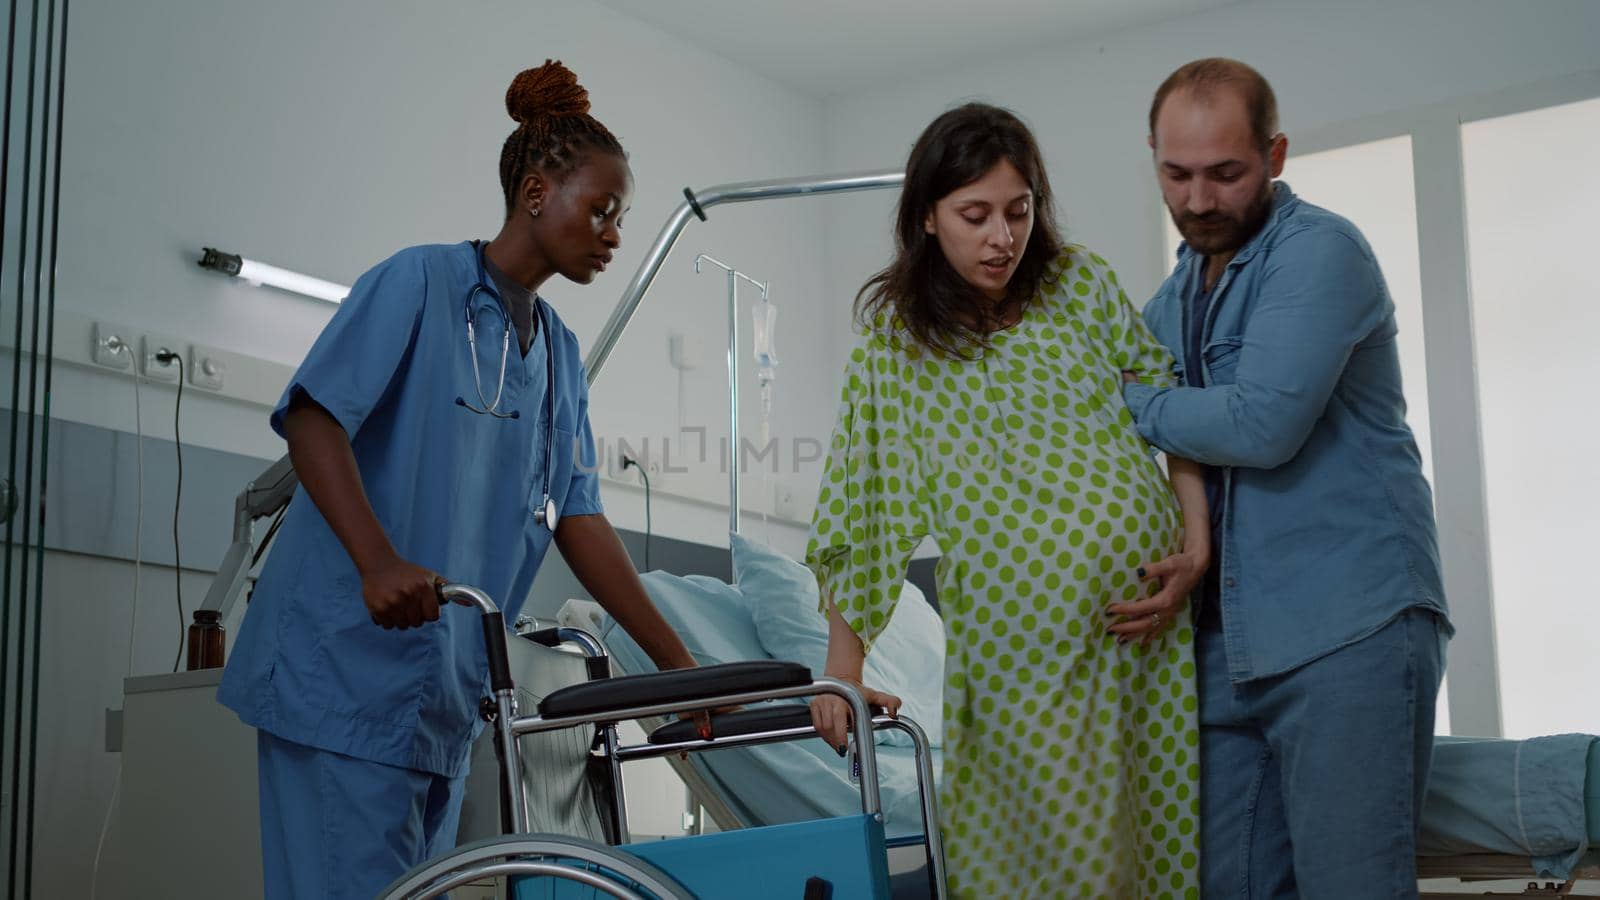 Caucasian man helping pregnant woman in hospital ward by DCStudio